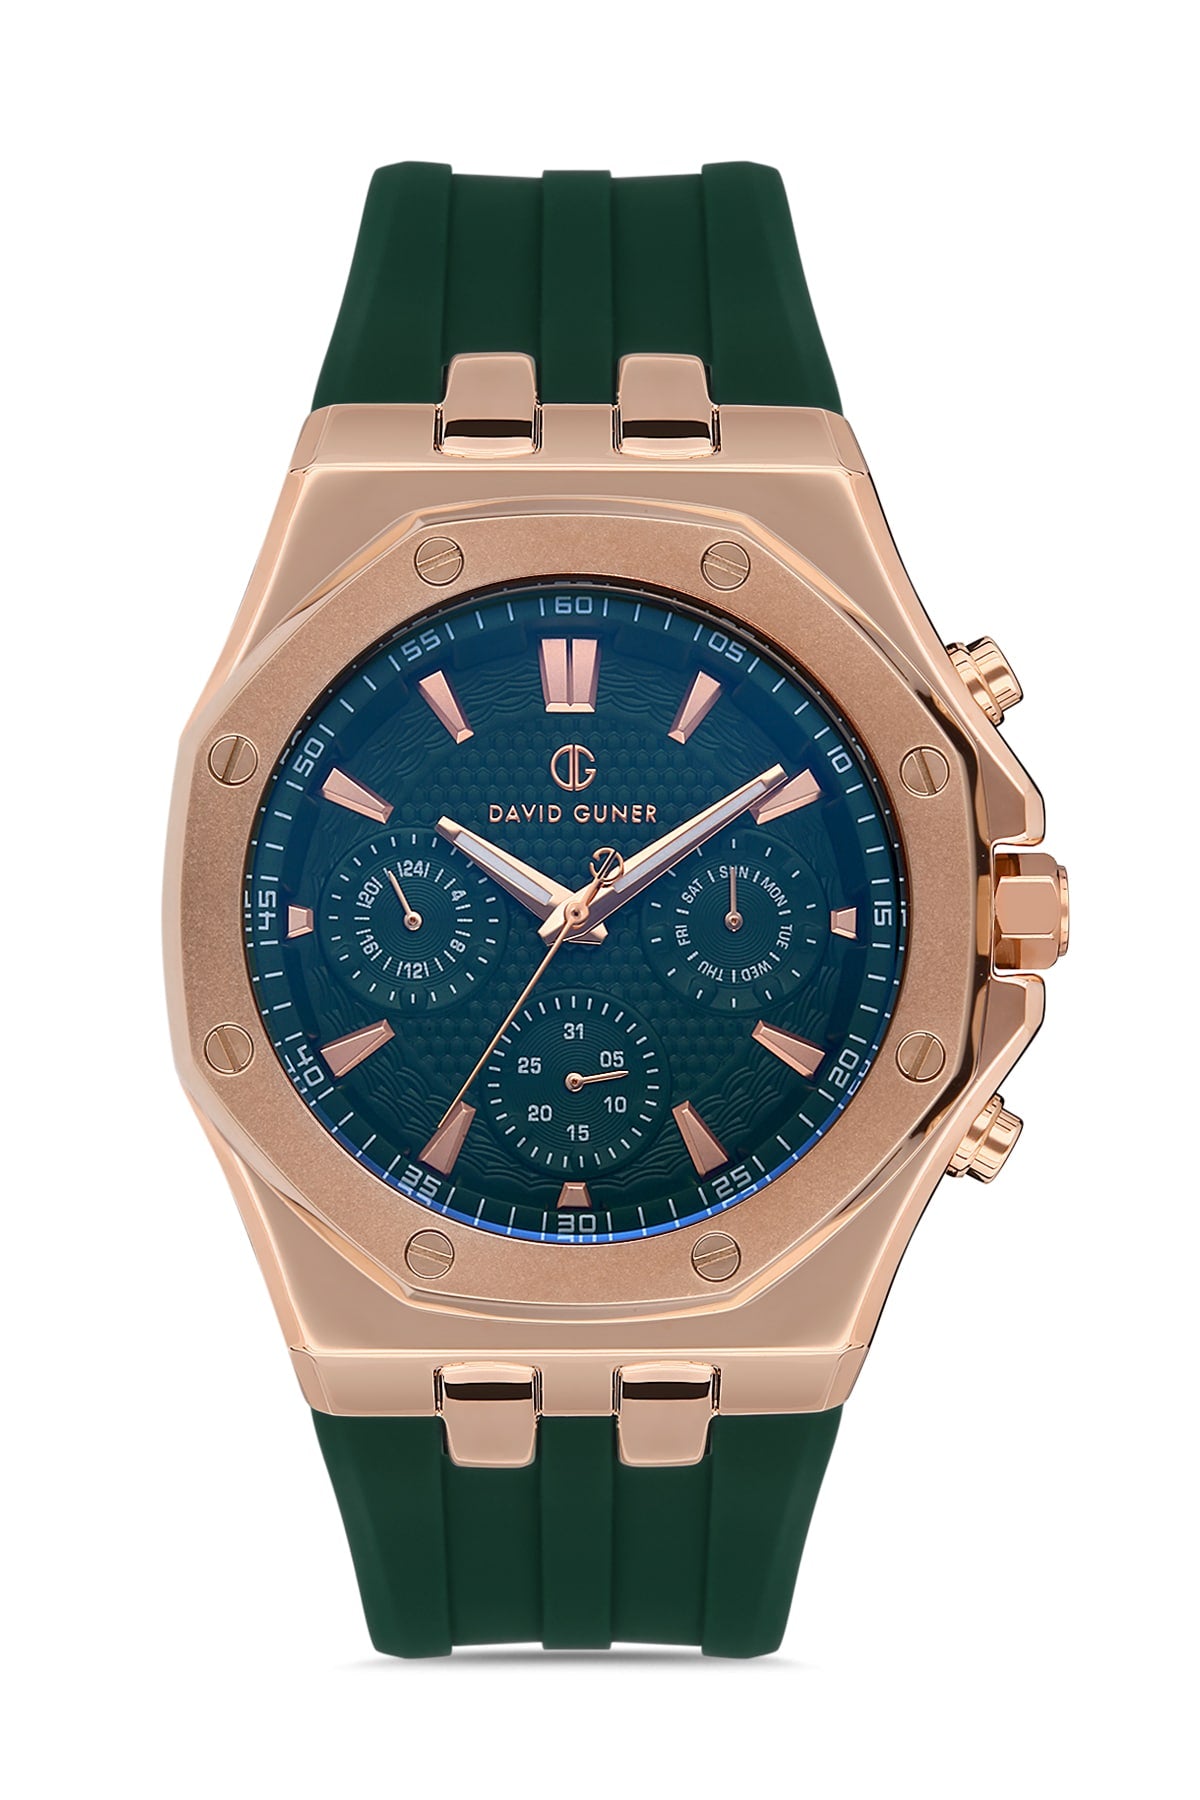 DAVID GUNER Rose-Coated Green Dial Multifunctional Men's Wristwatch